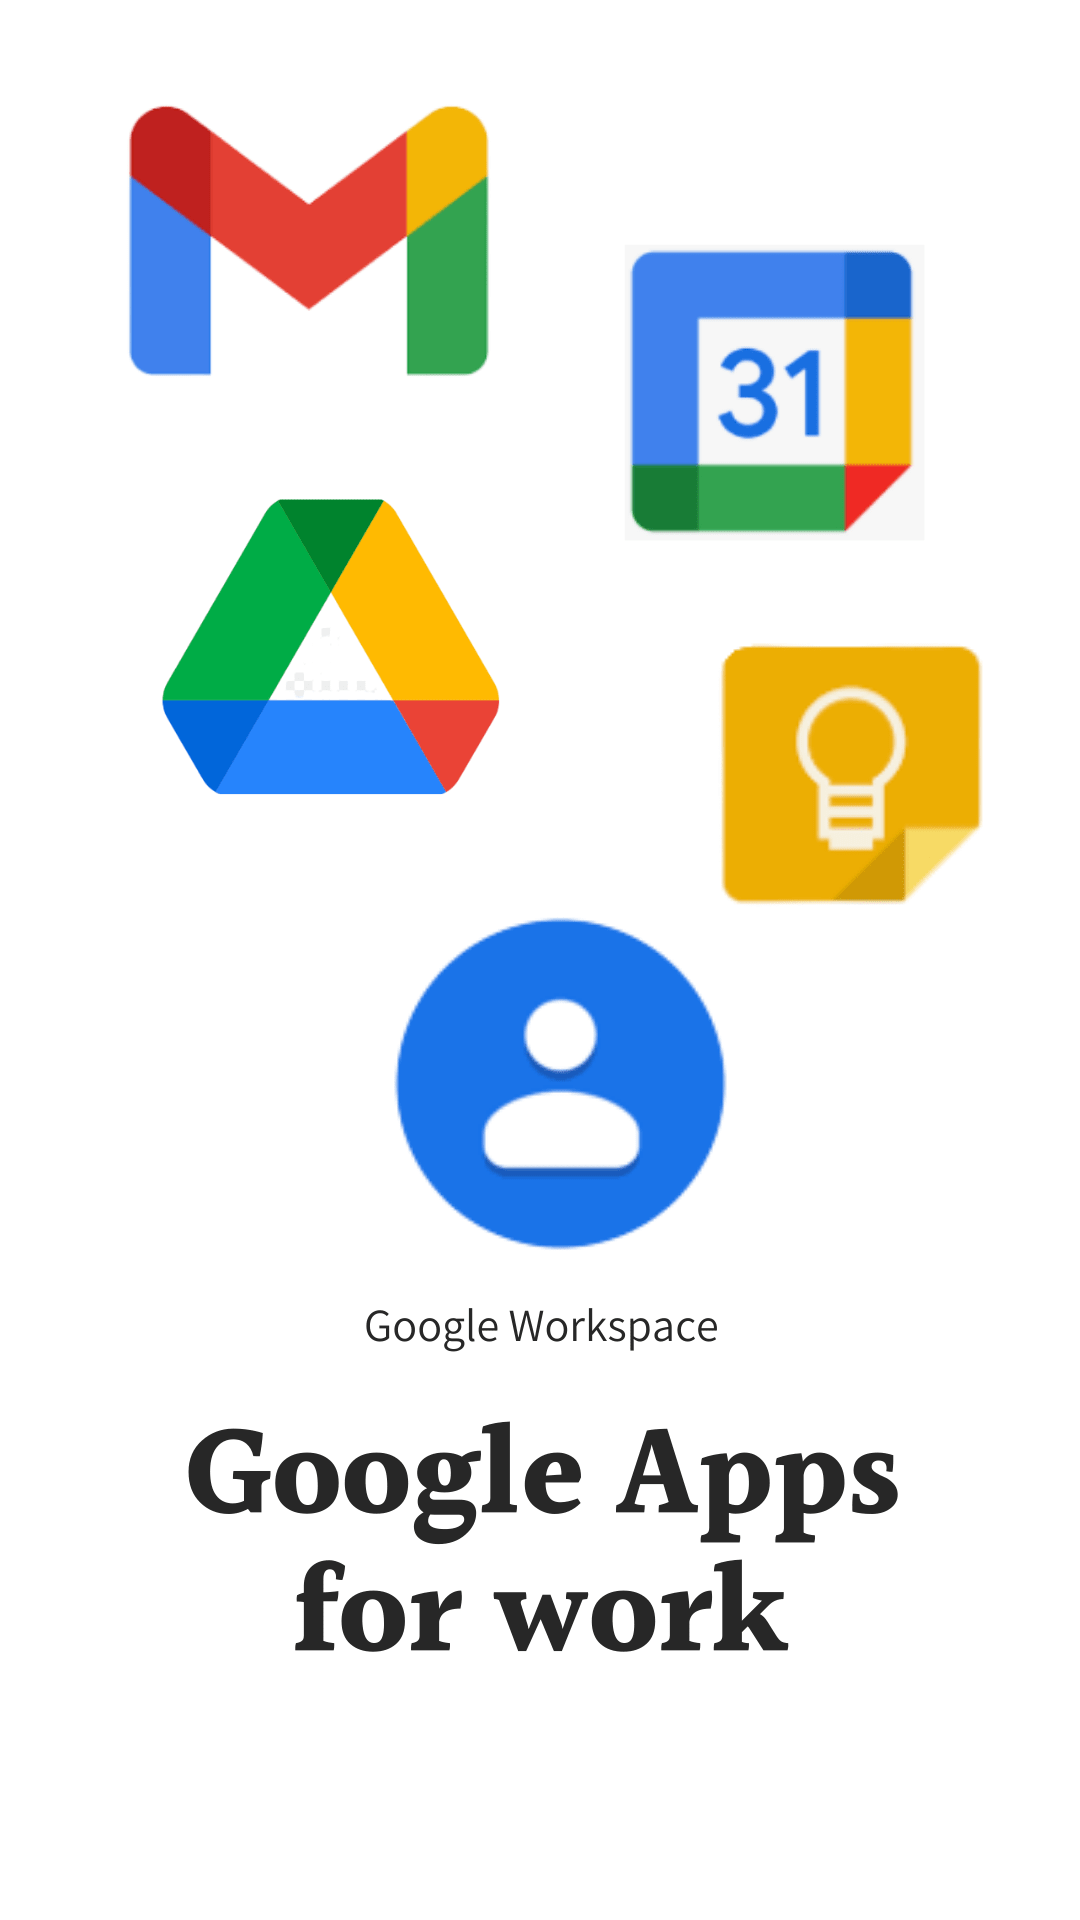 Google apps for work